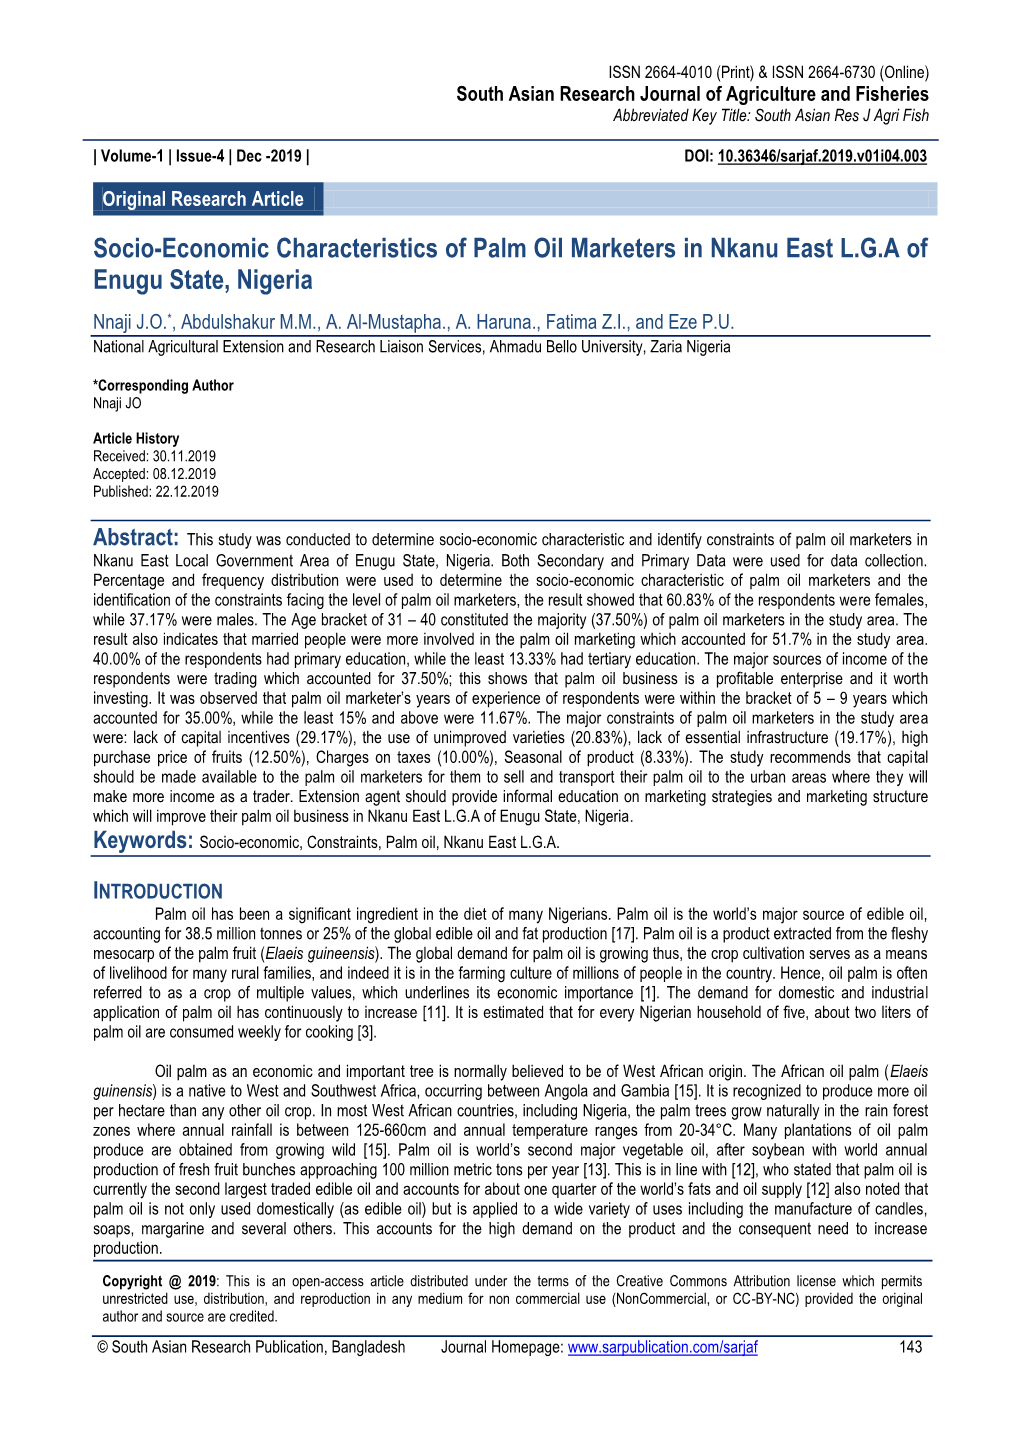 Socio-Economic Characteristics of Palm Oil Marketers in Nkanu East L.G.A of Enugu State, Nigeria